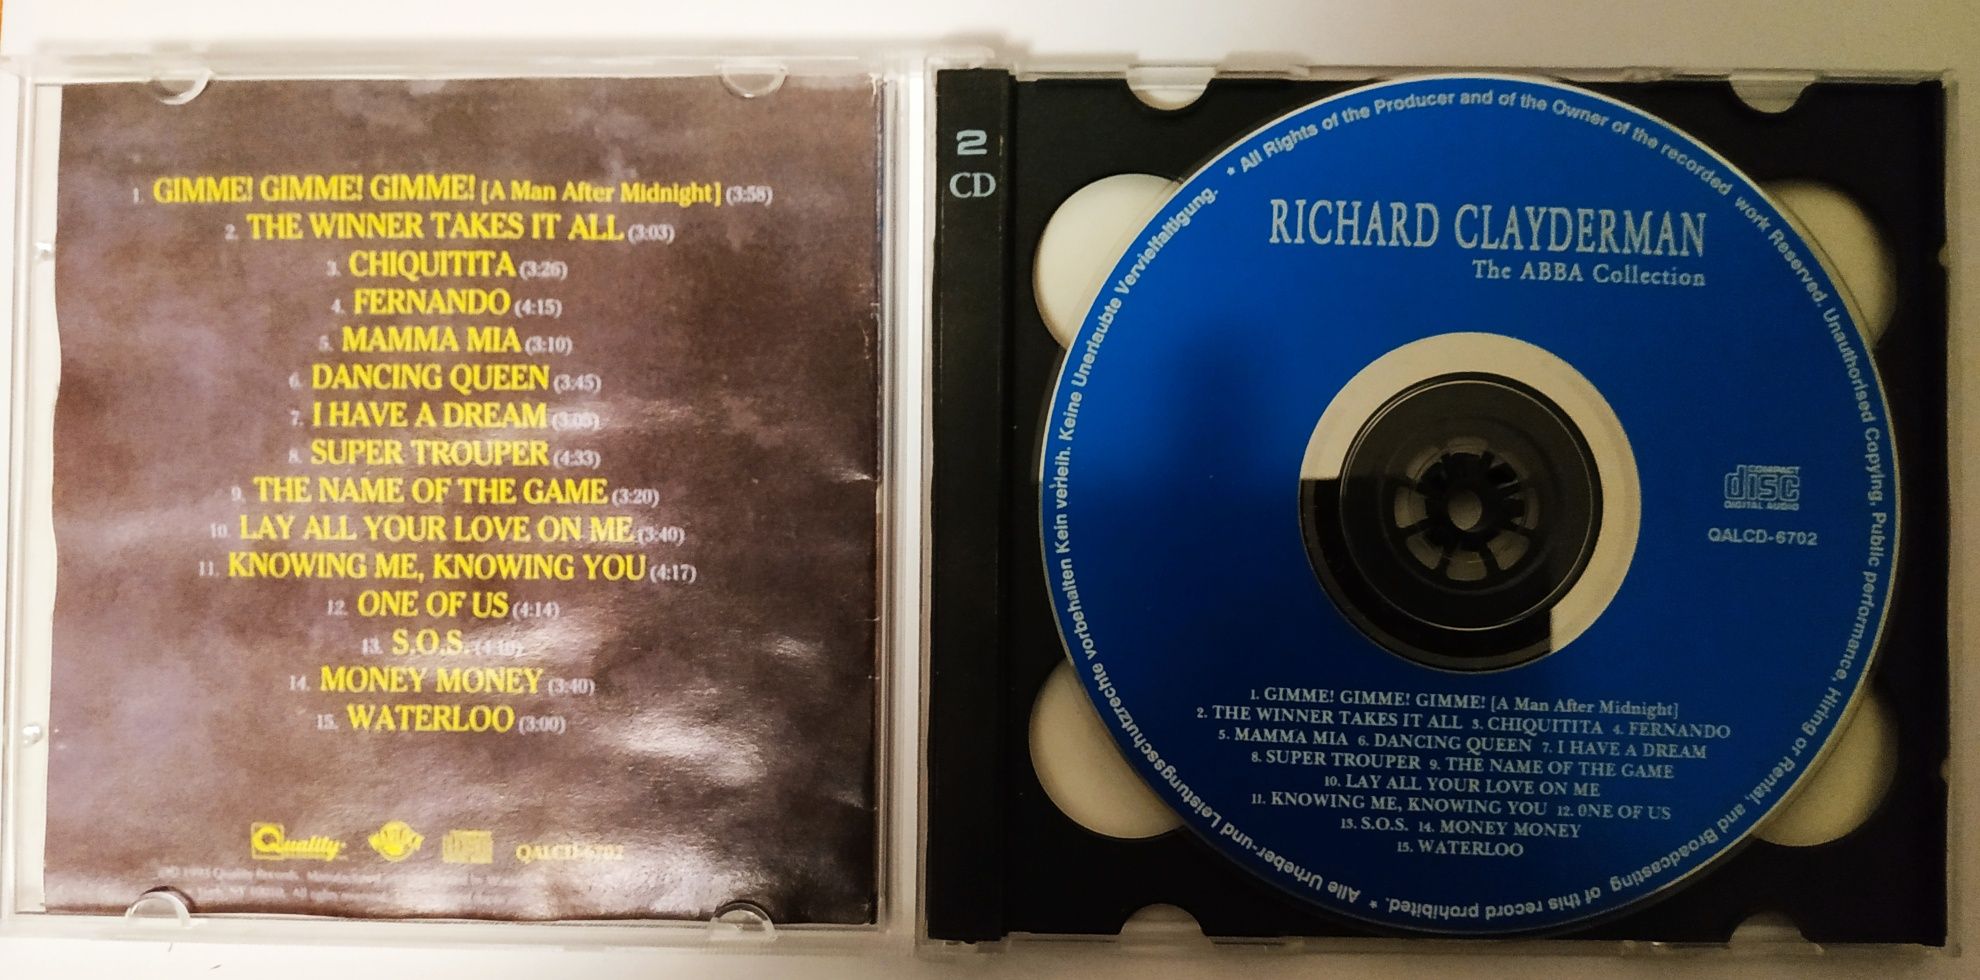 Richard Cleyderman The ABBA